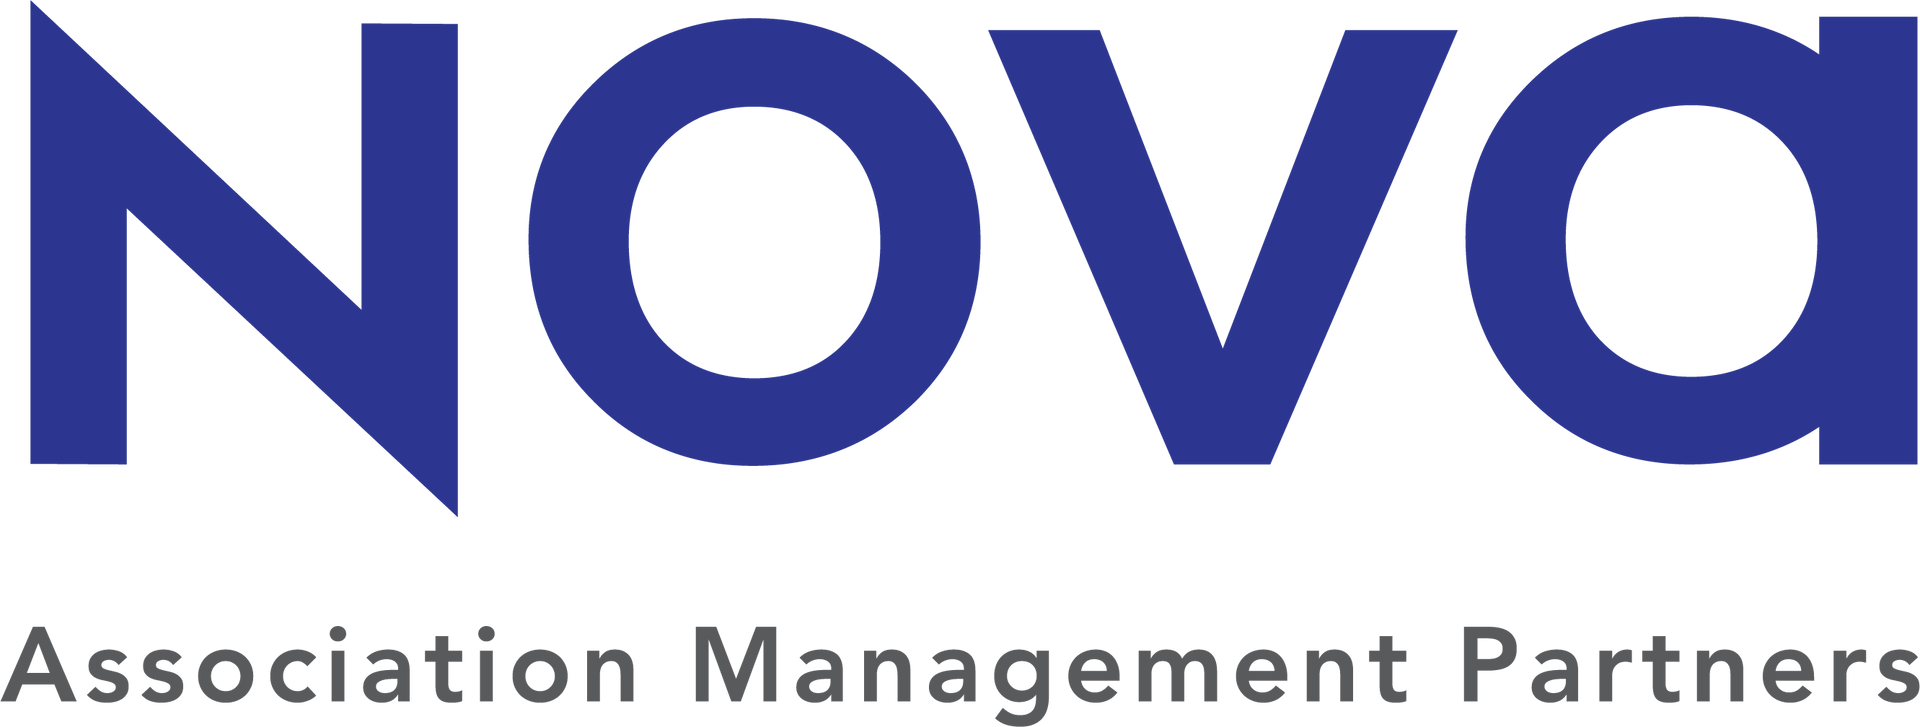 the nova association management partners logo is blue and white